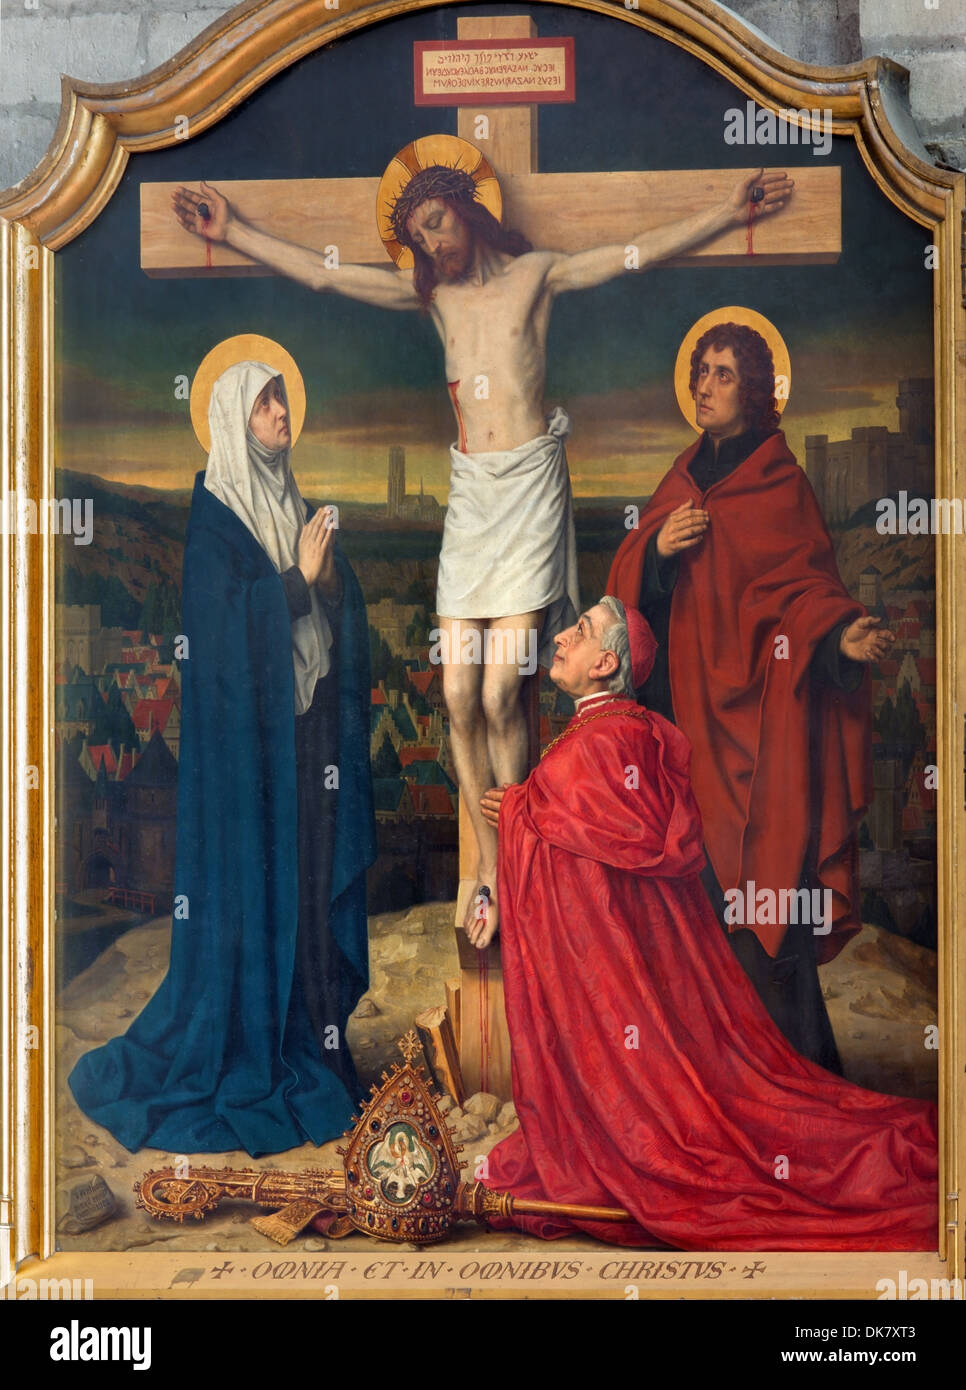 MECHELEN, BELGIUM - SEPTEMBER 6: Paint of Crucifixion scene in St. Rumbold's cathedral Stock Photo